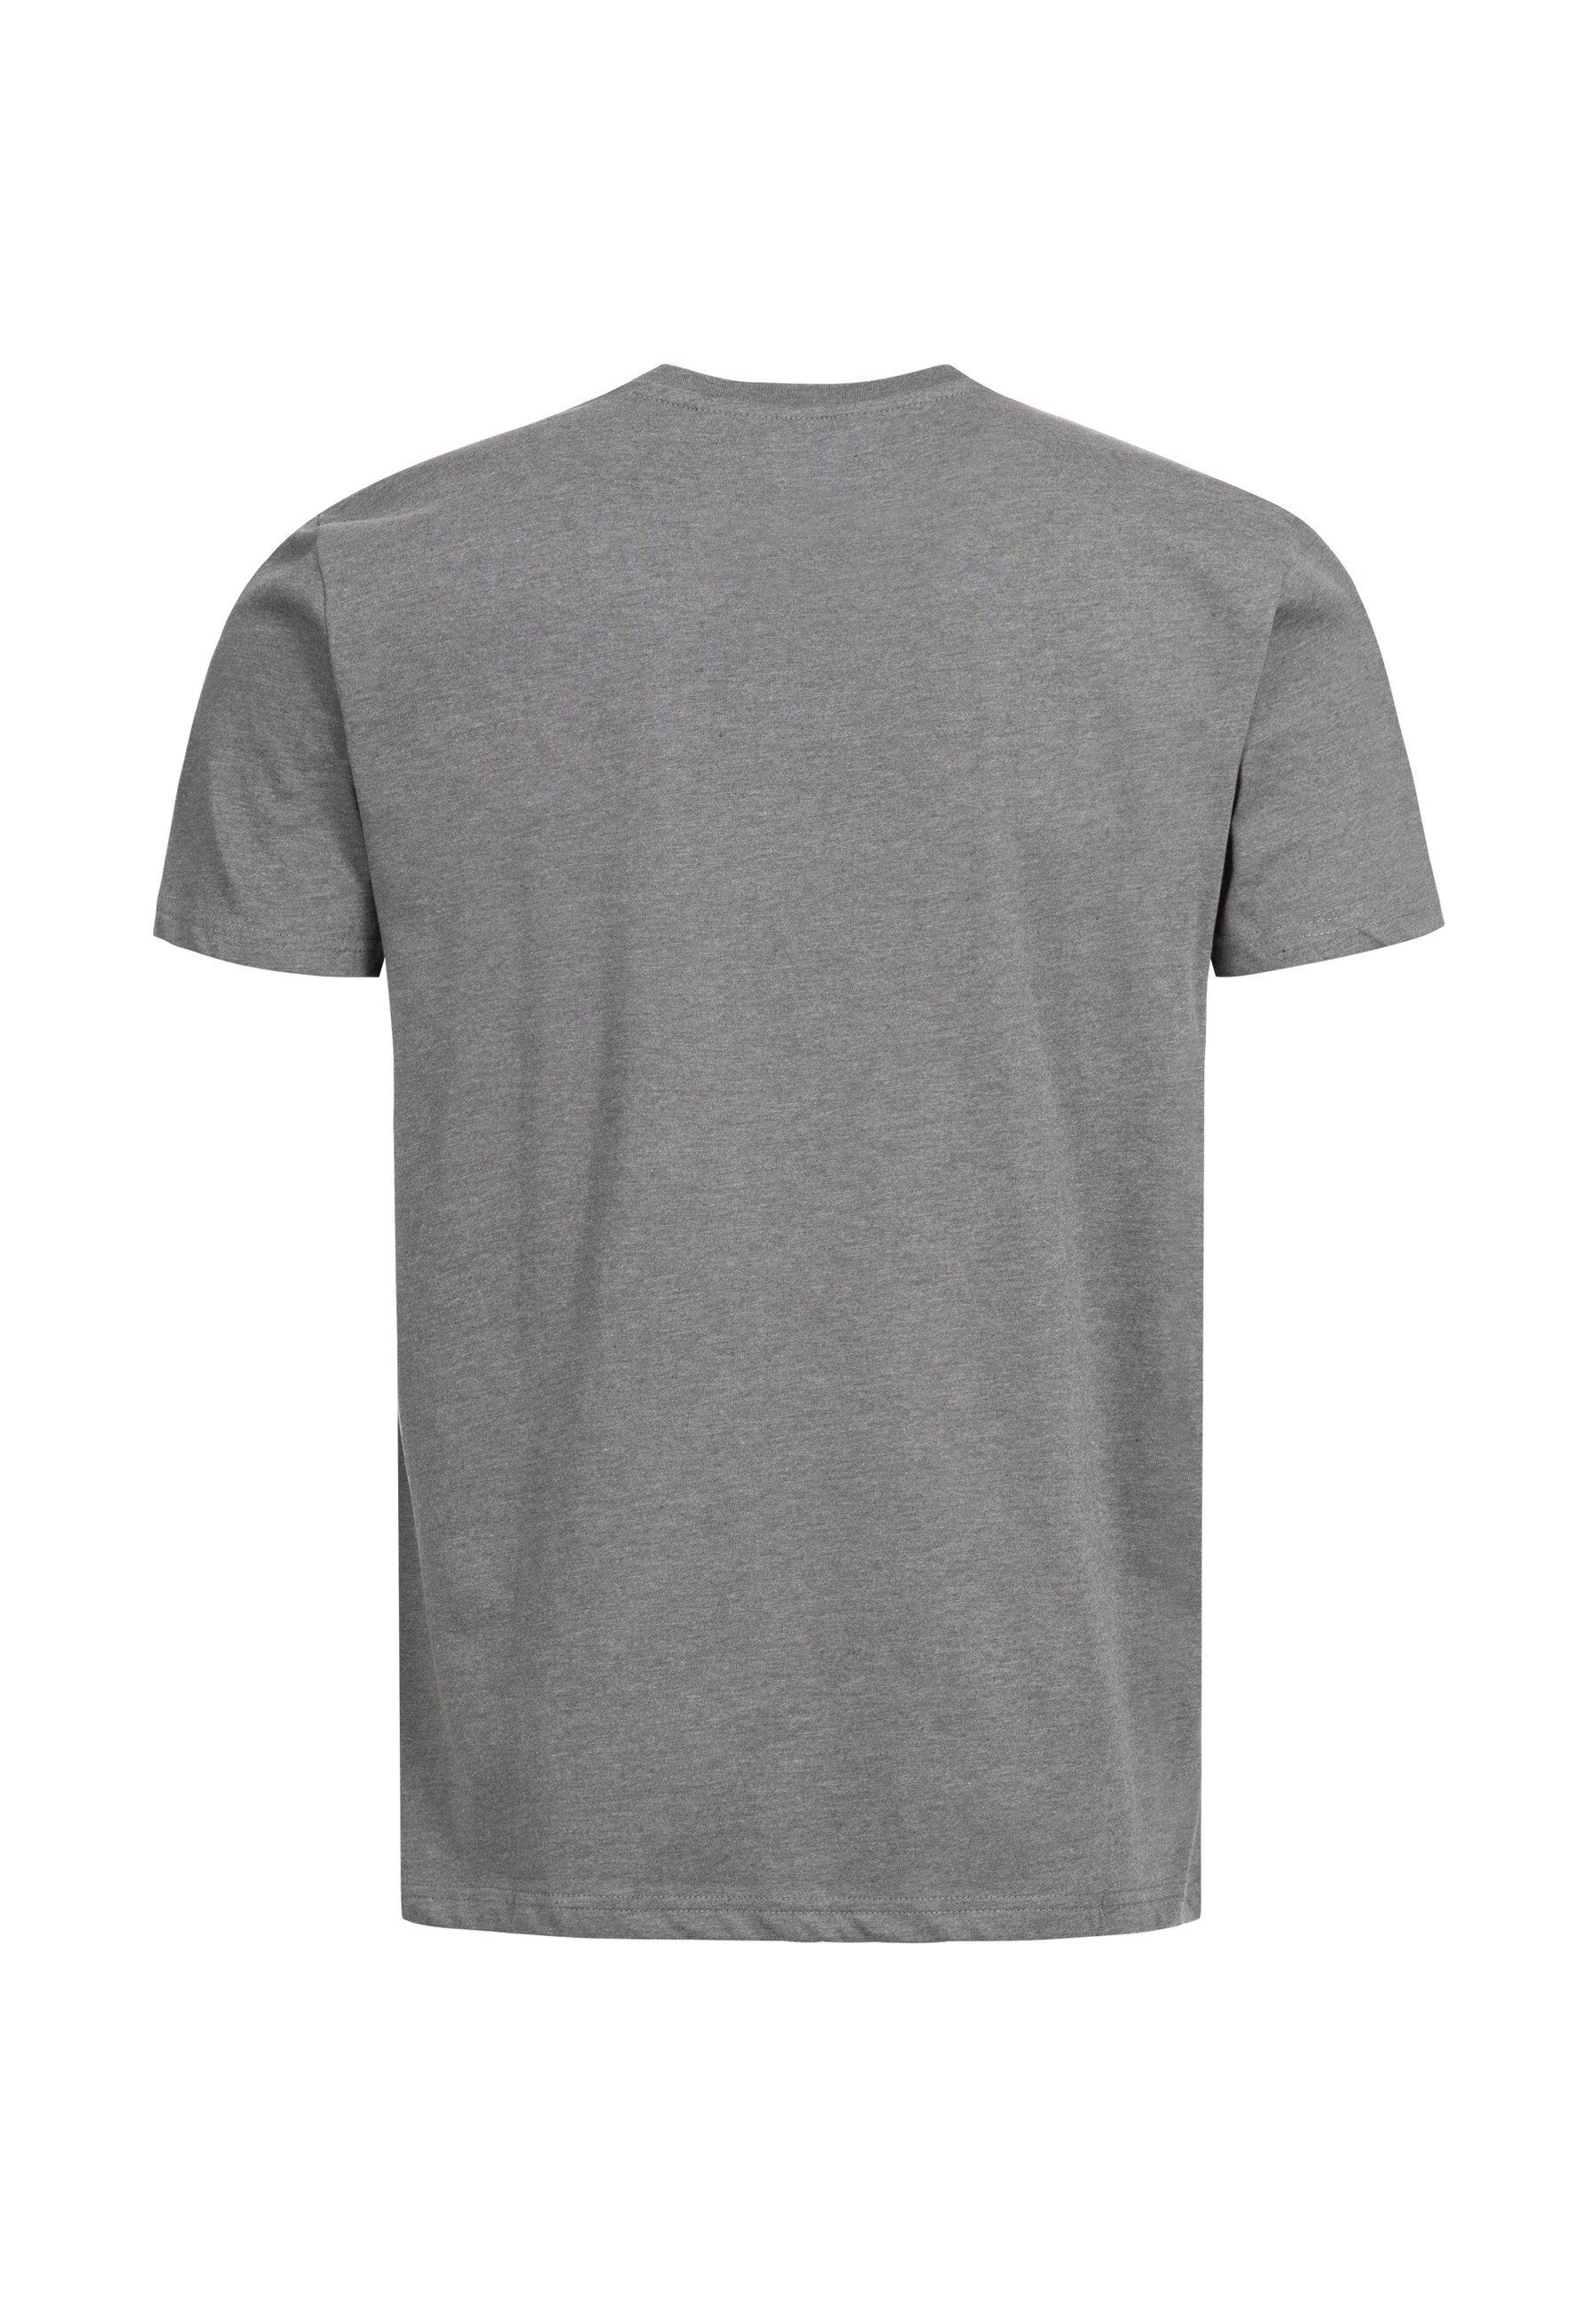 Lonsdale T-Shirt Shirt Kurzarm-T-Shirt GARGRAVE mit grau